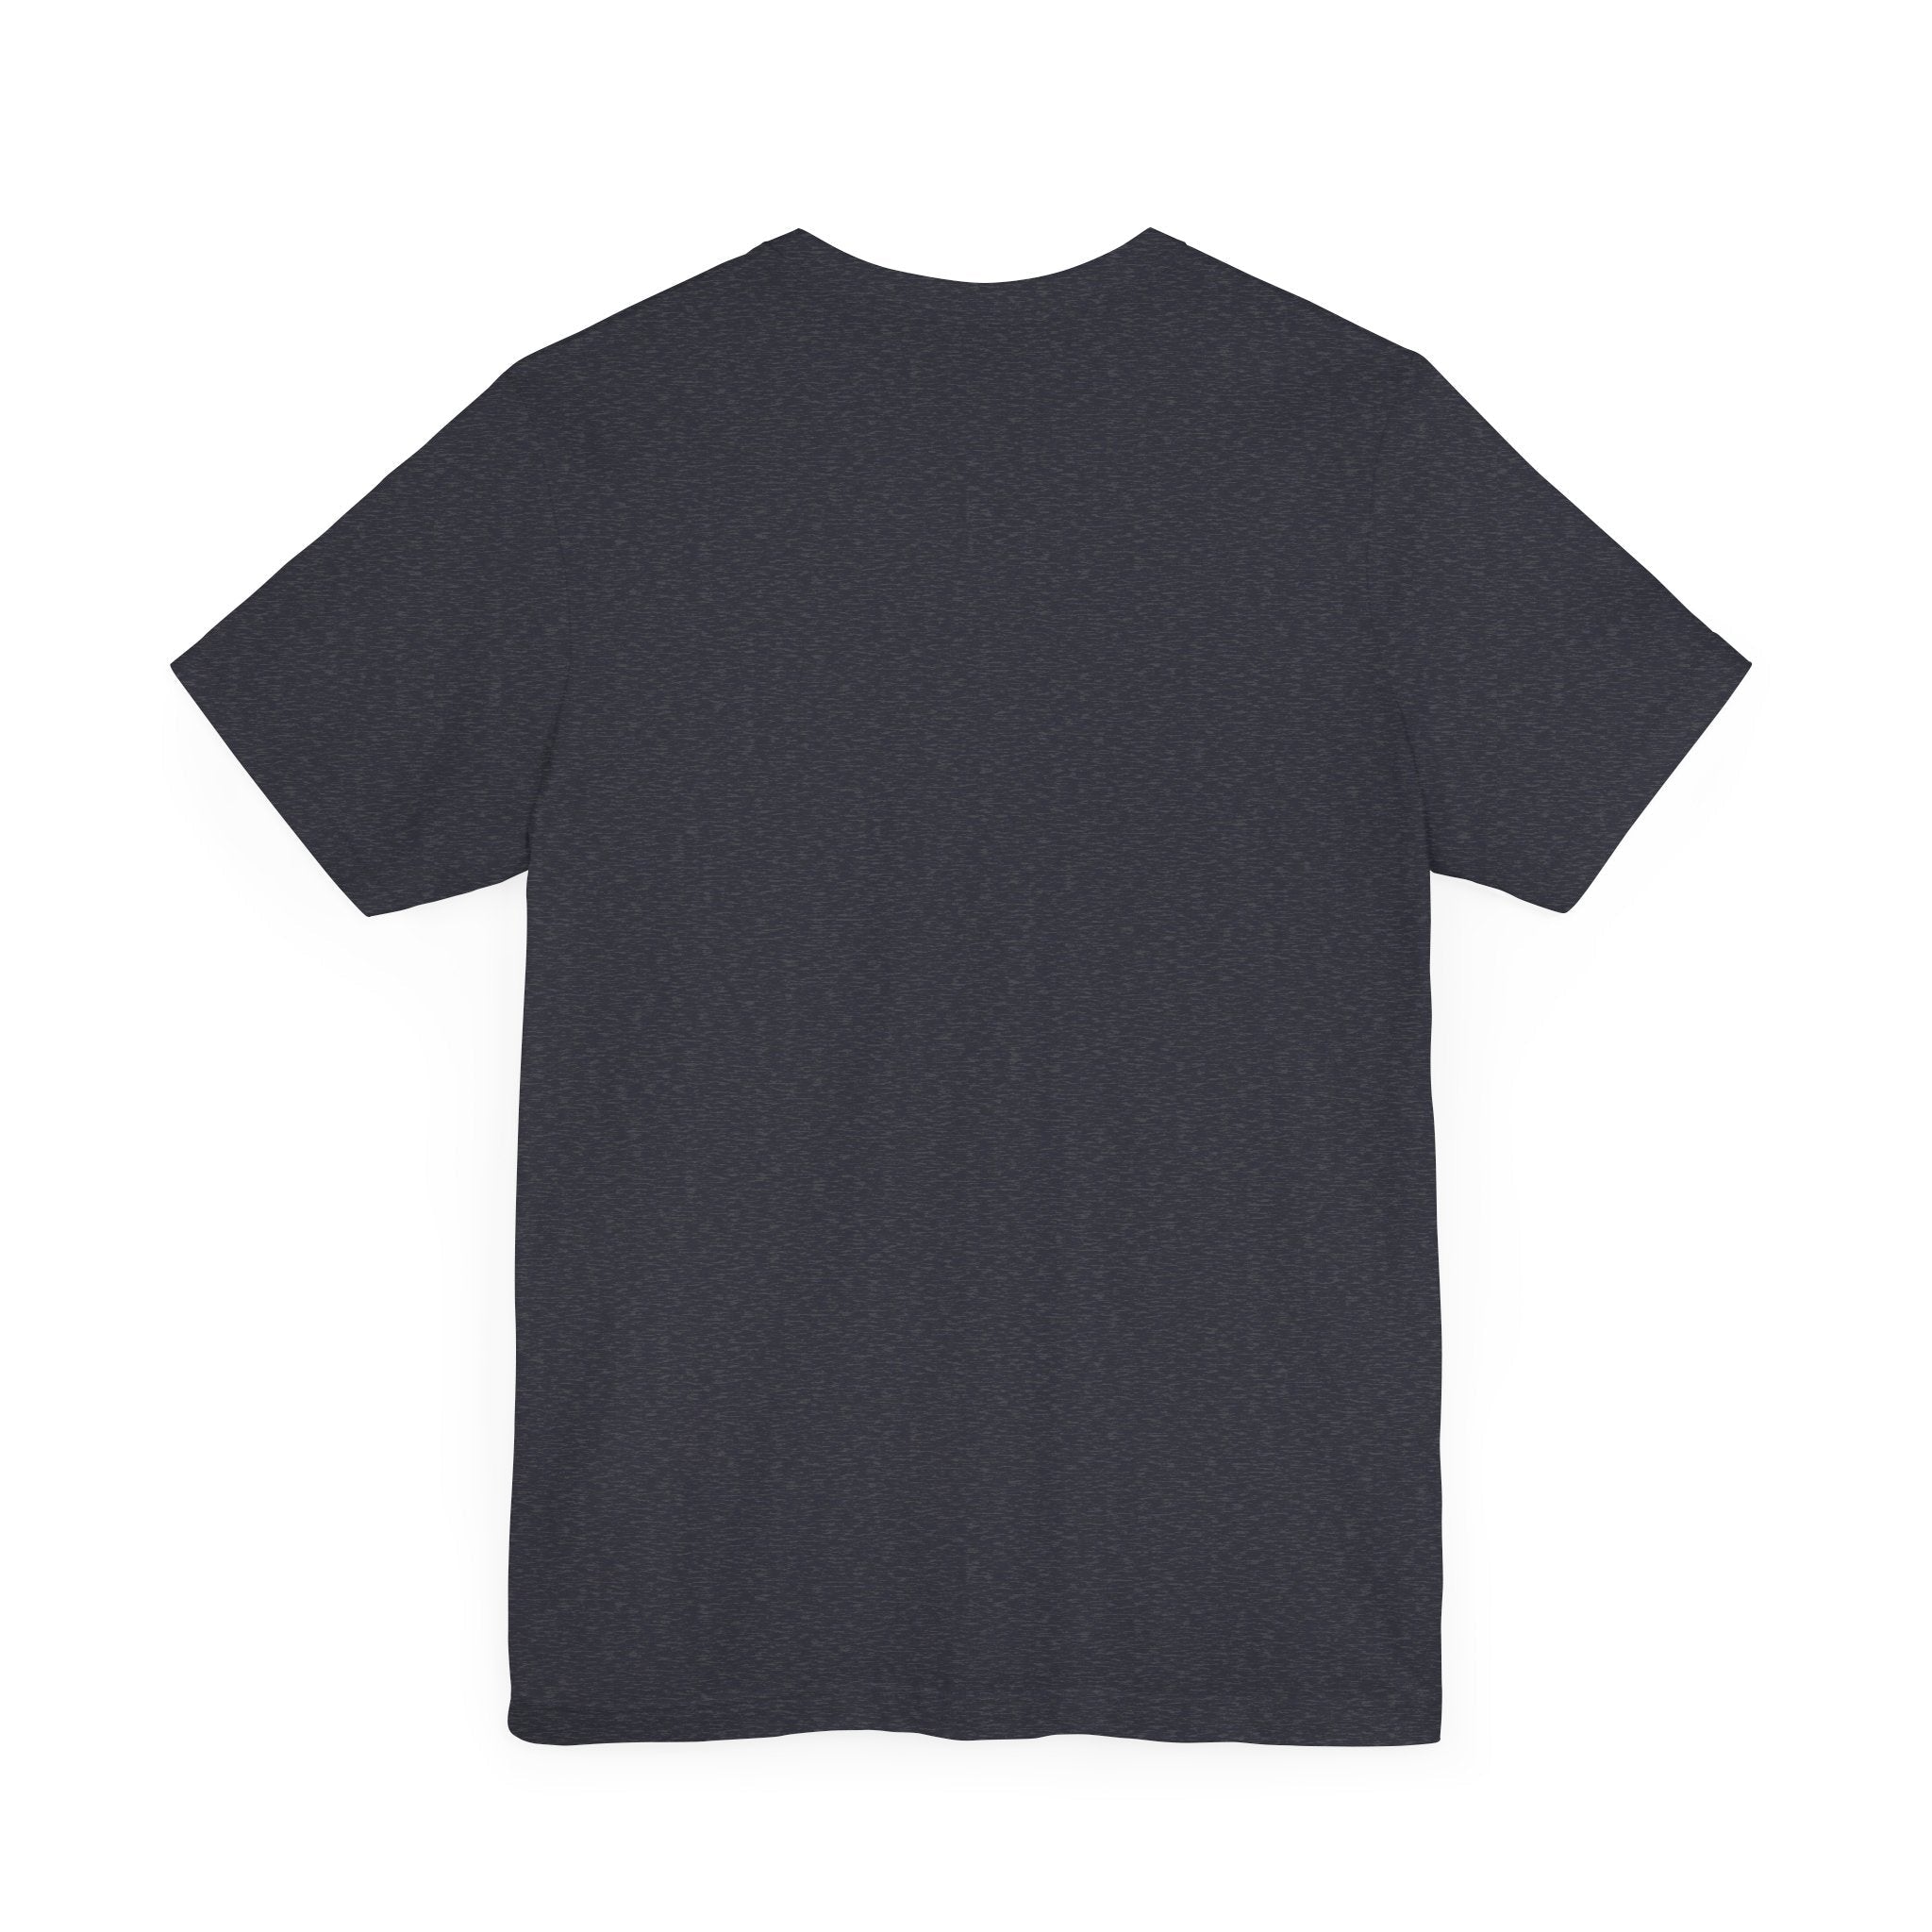 Direct-to-Garment Printed Black Surfing T-Shirt with White Logo, Soulshinecreators Unisex Tee